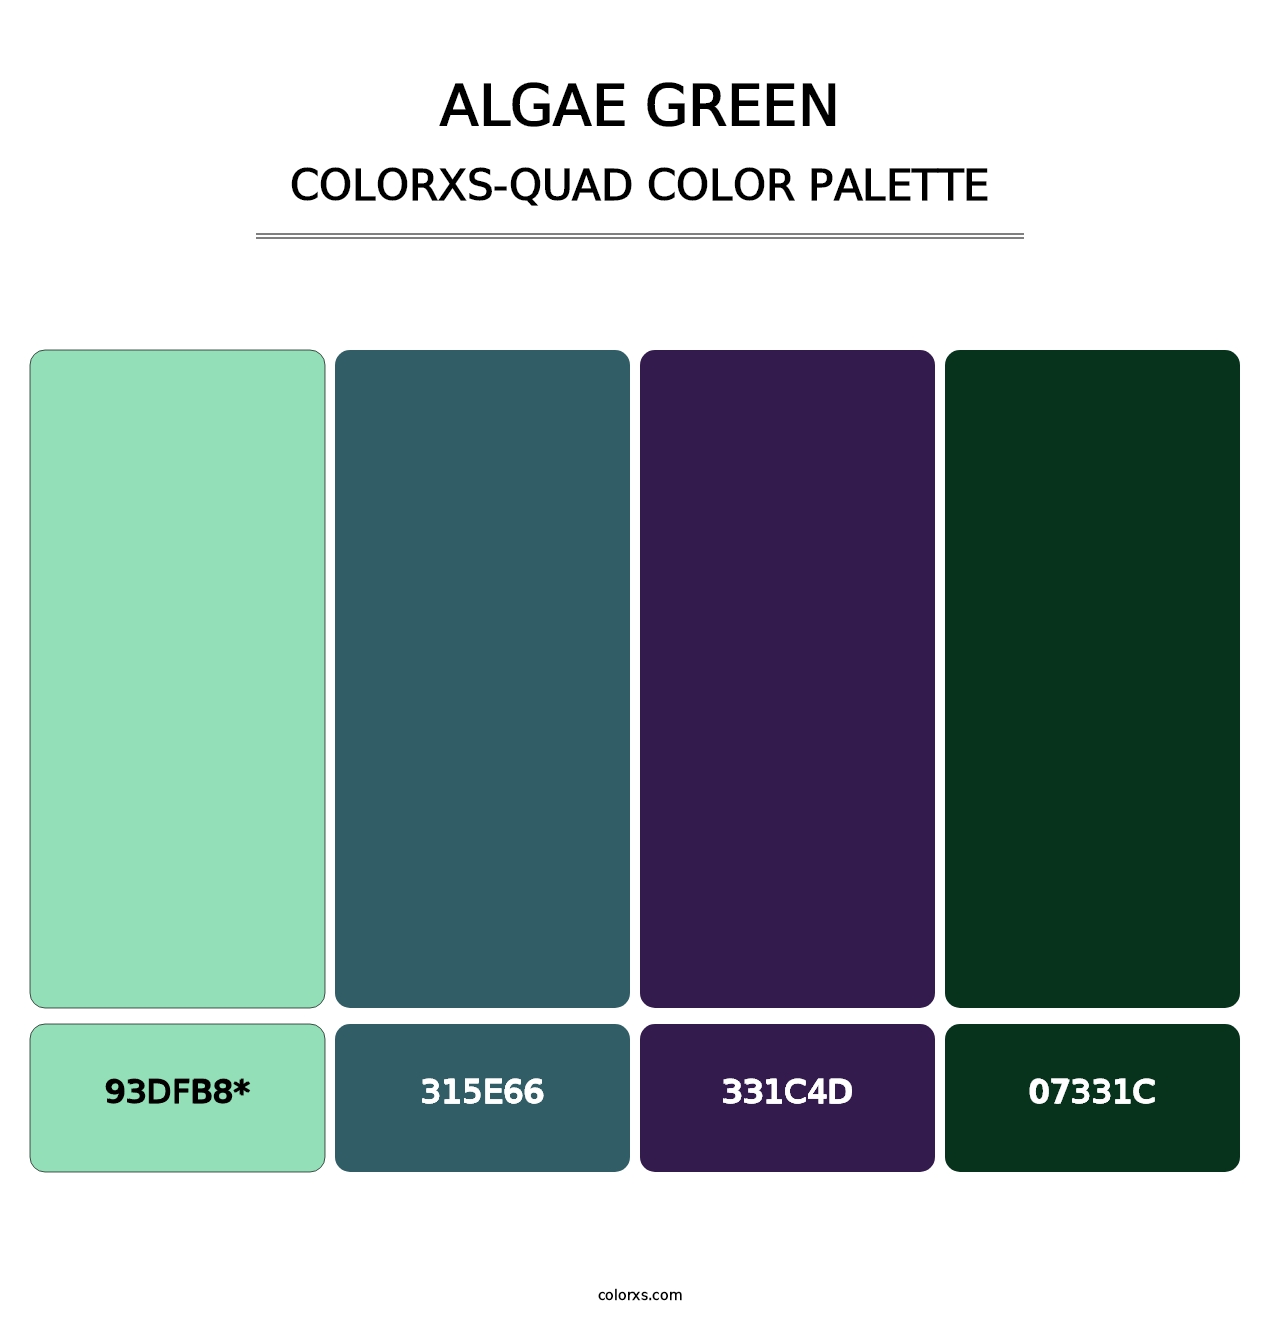 Algae Green - Colorxs Quad Palette